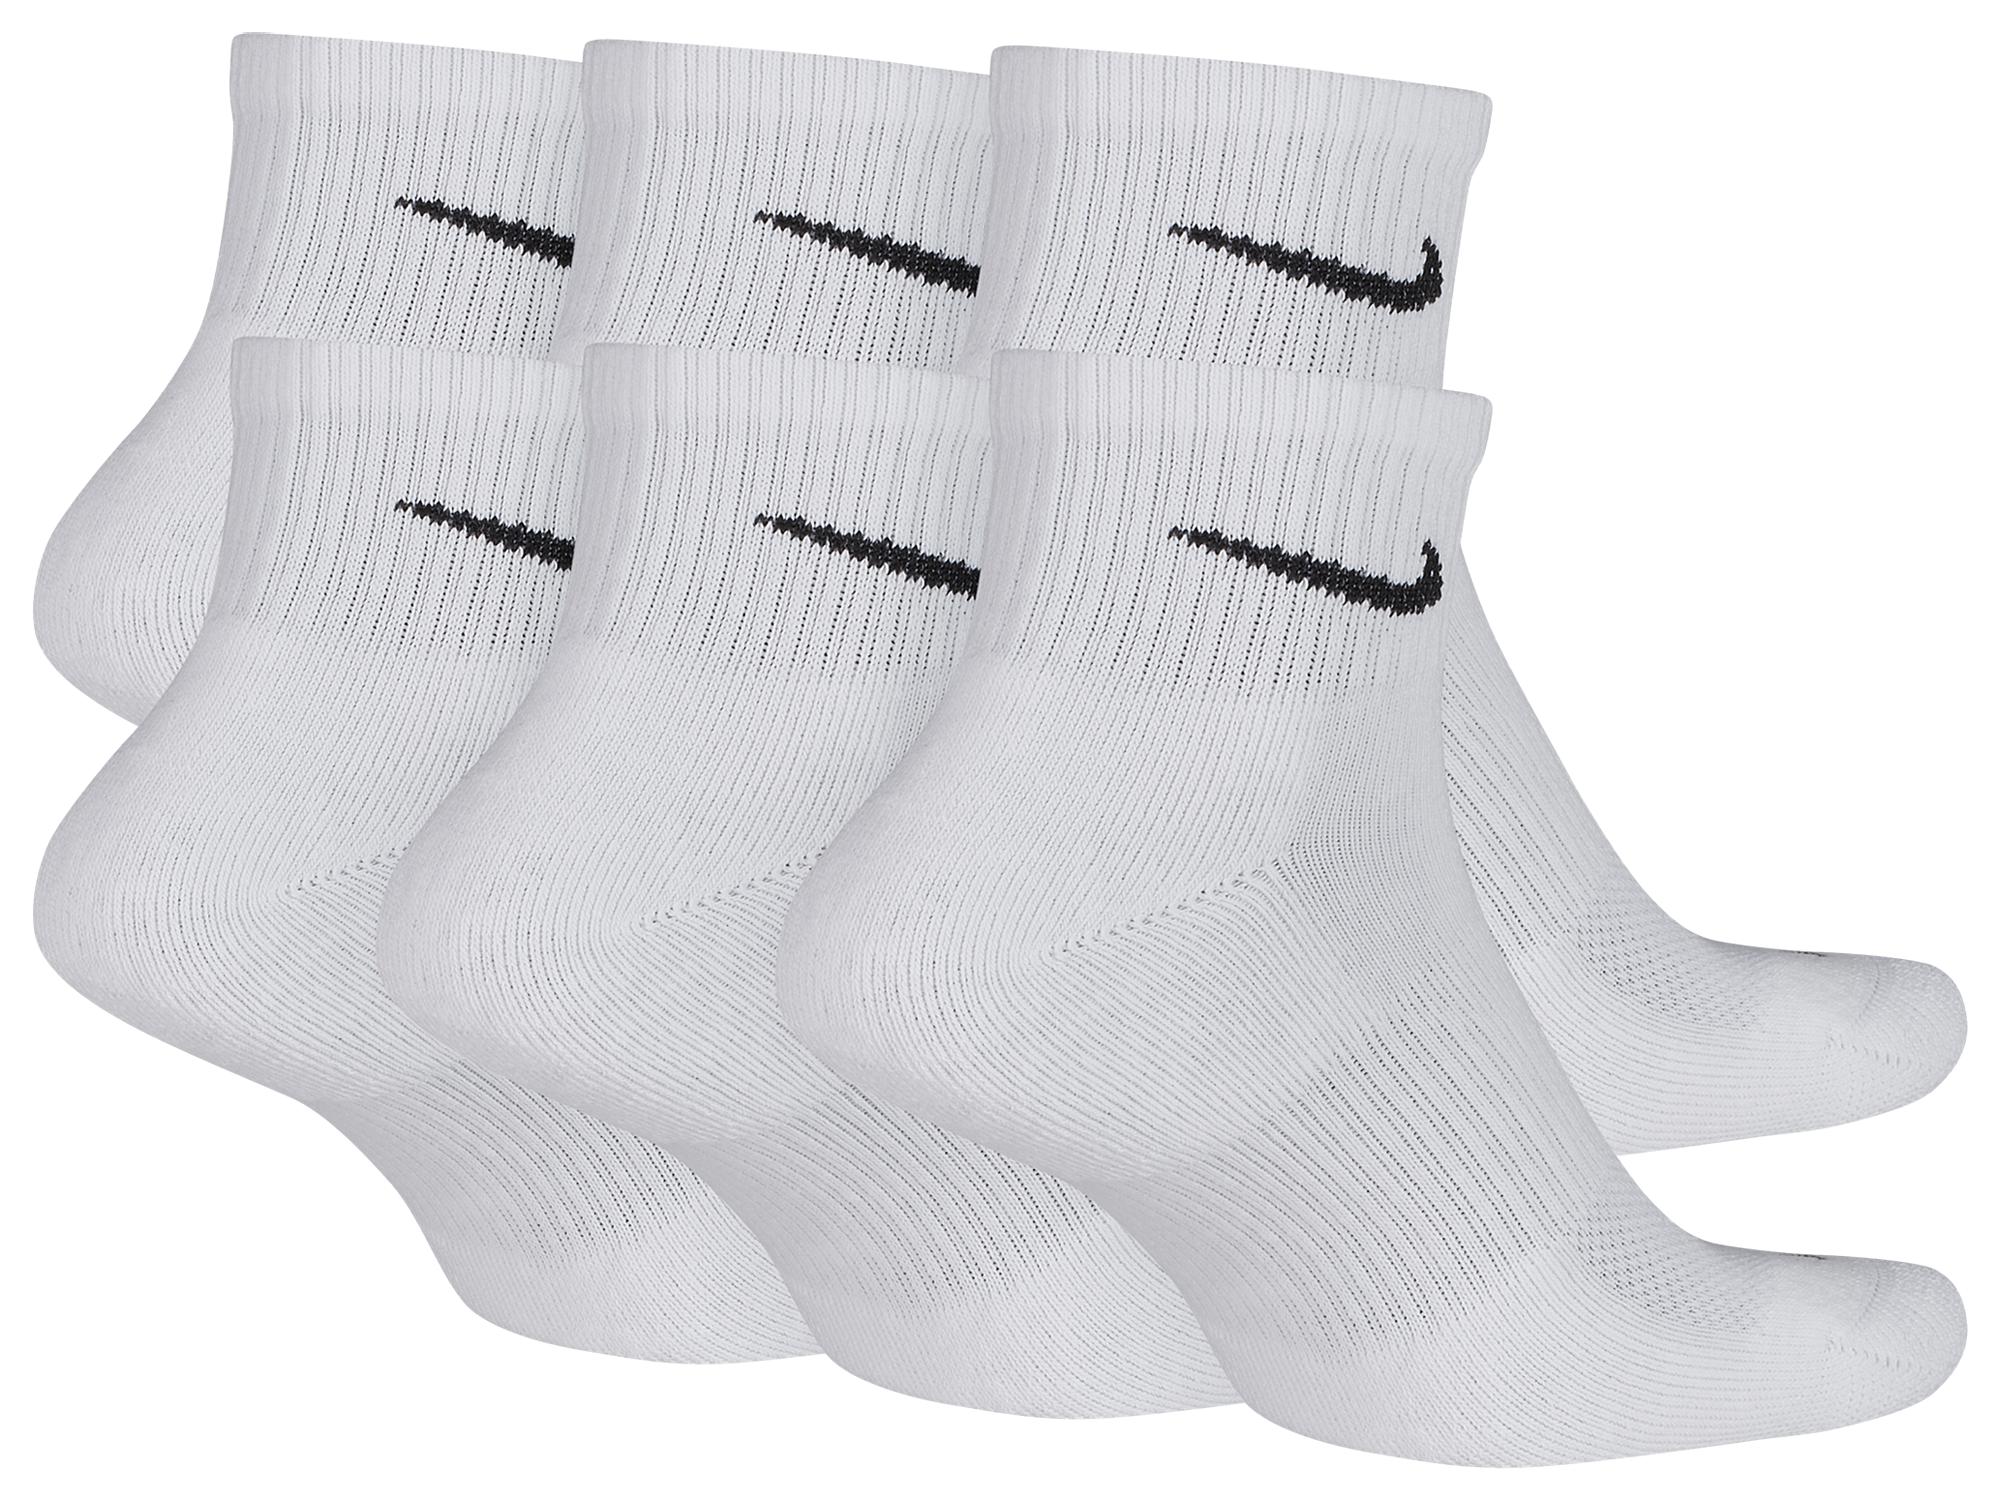 Nike 6 Pack Dri-fit Plus Quarter Socks in White/Black (White) for Men -  Save 18% - Lyst